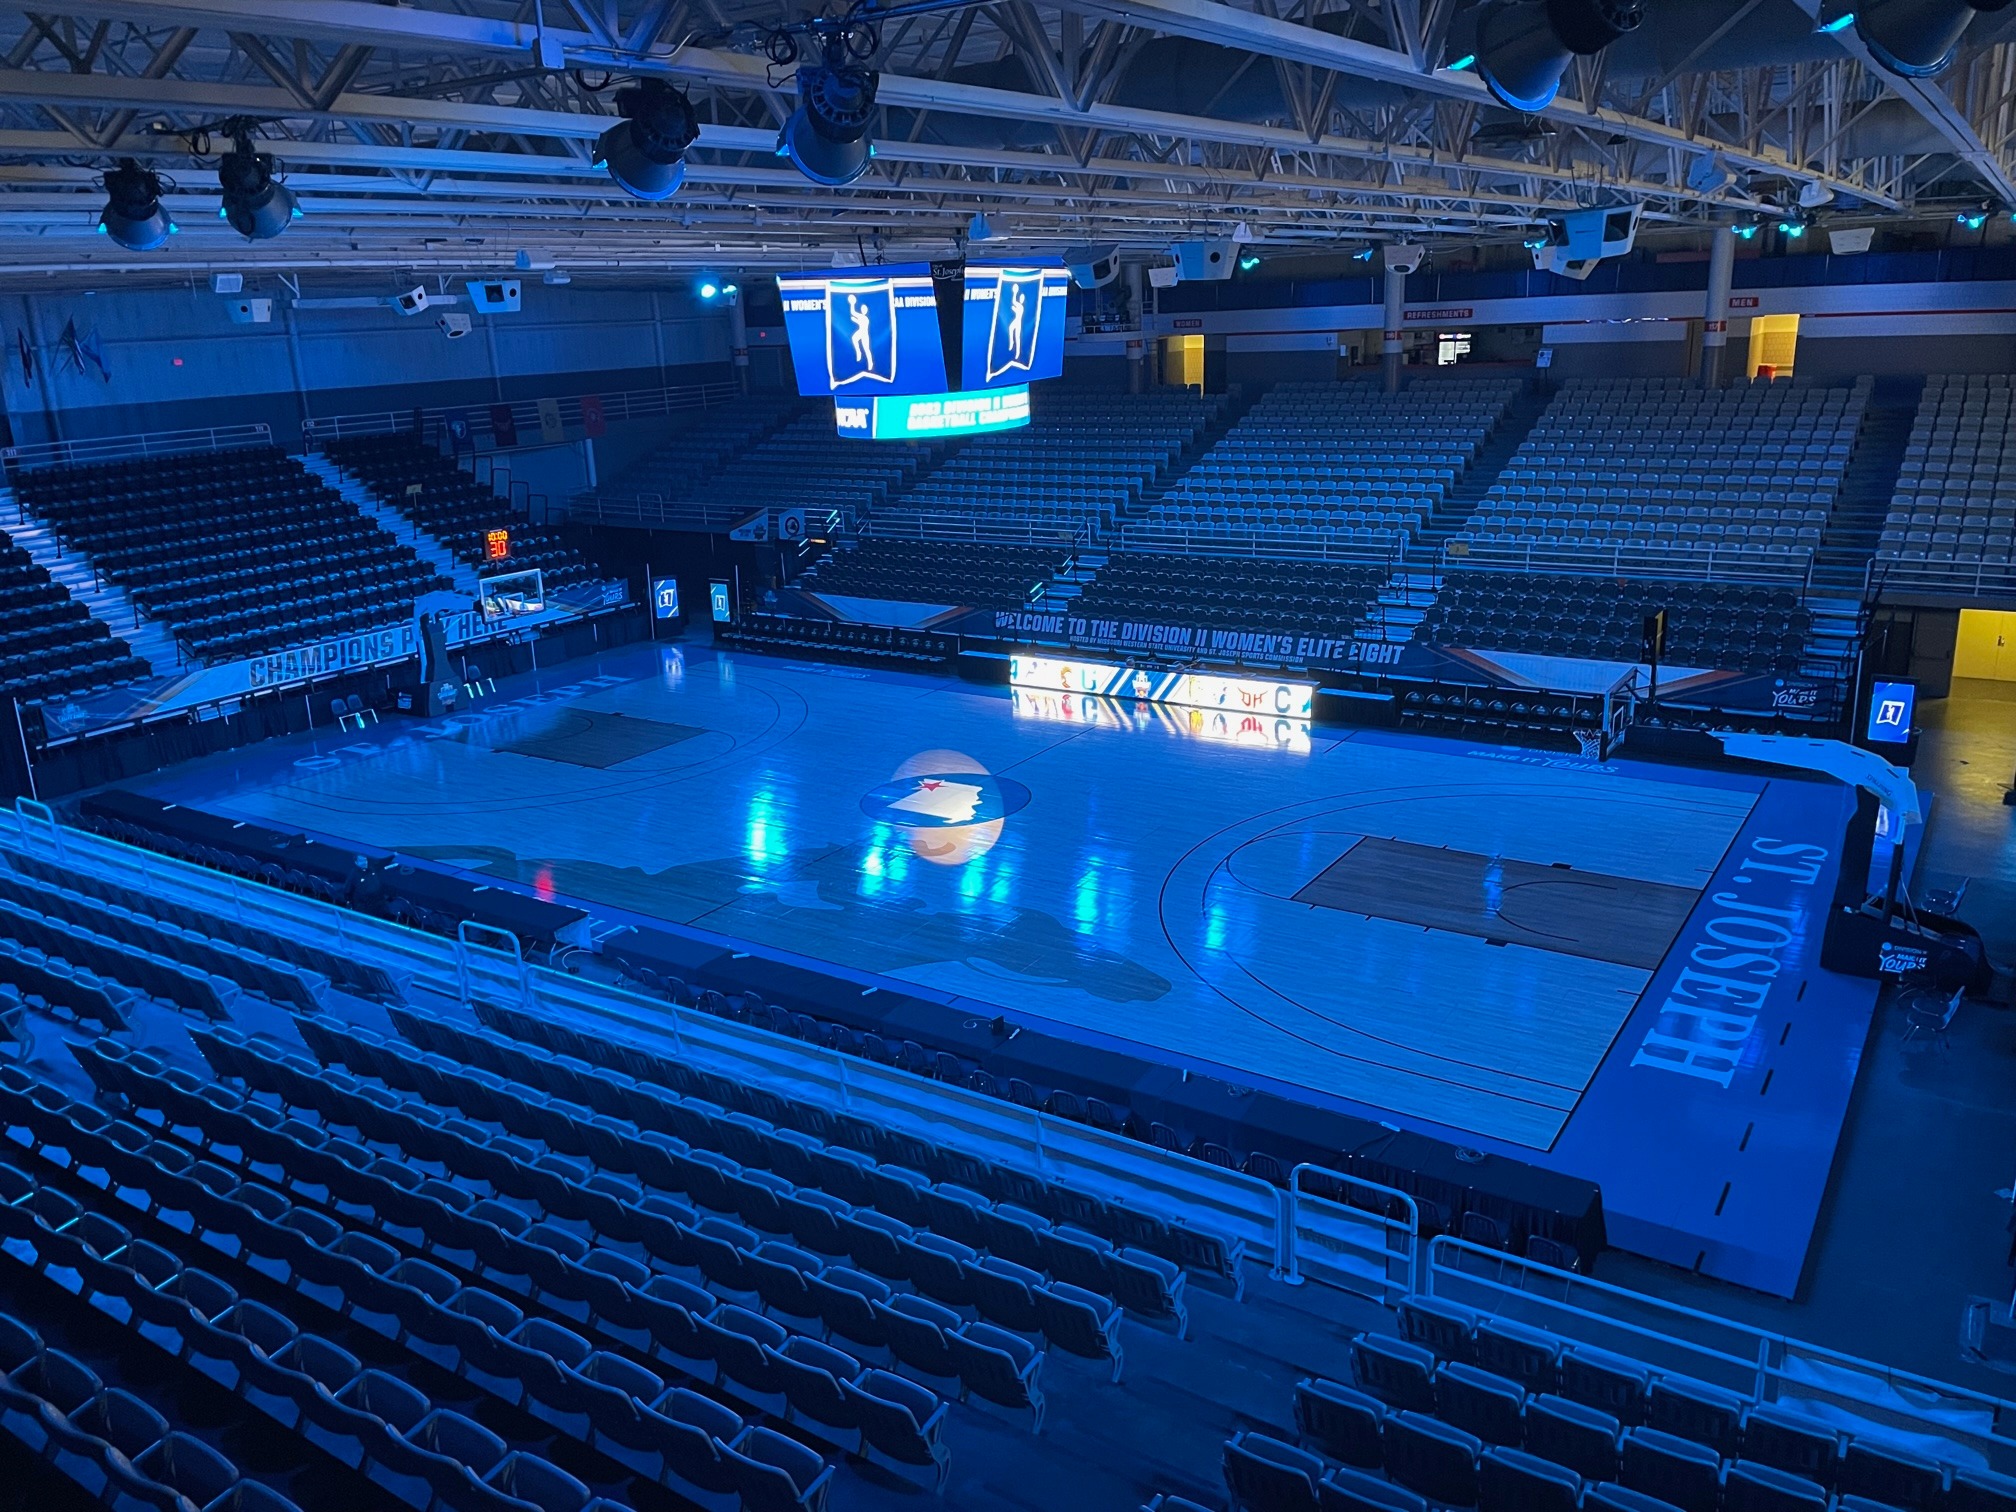 St. Joseph will host the NCAA Division 2 Women's Basketball Elite Eight tournament next week.